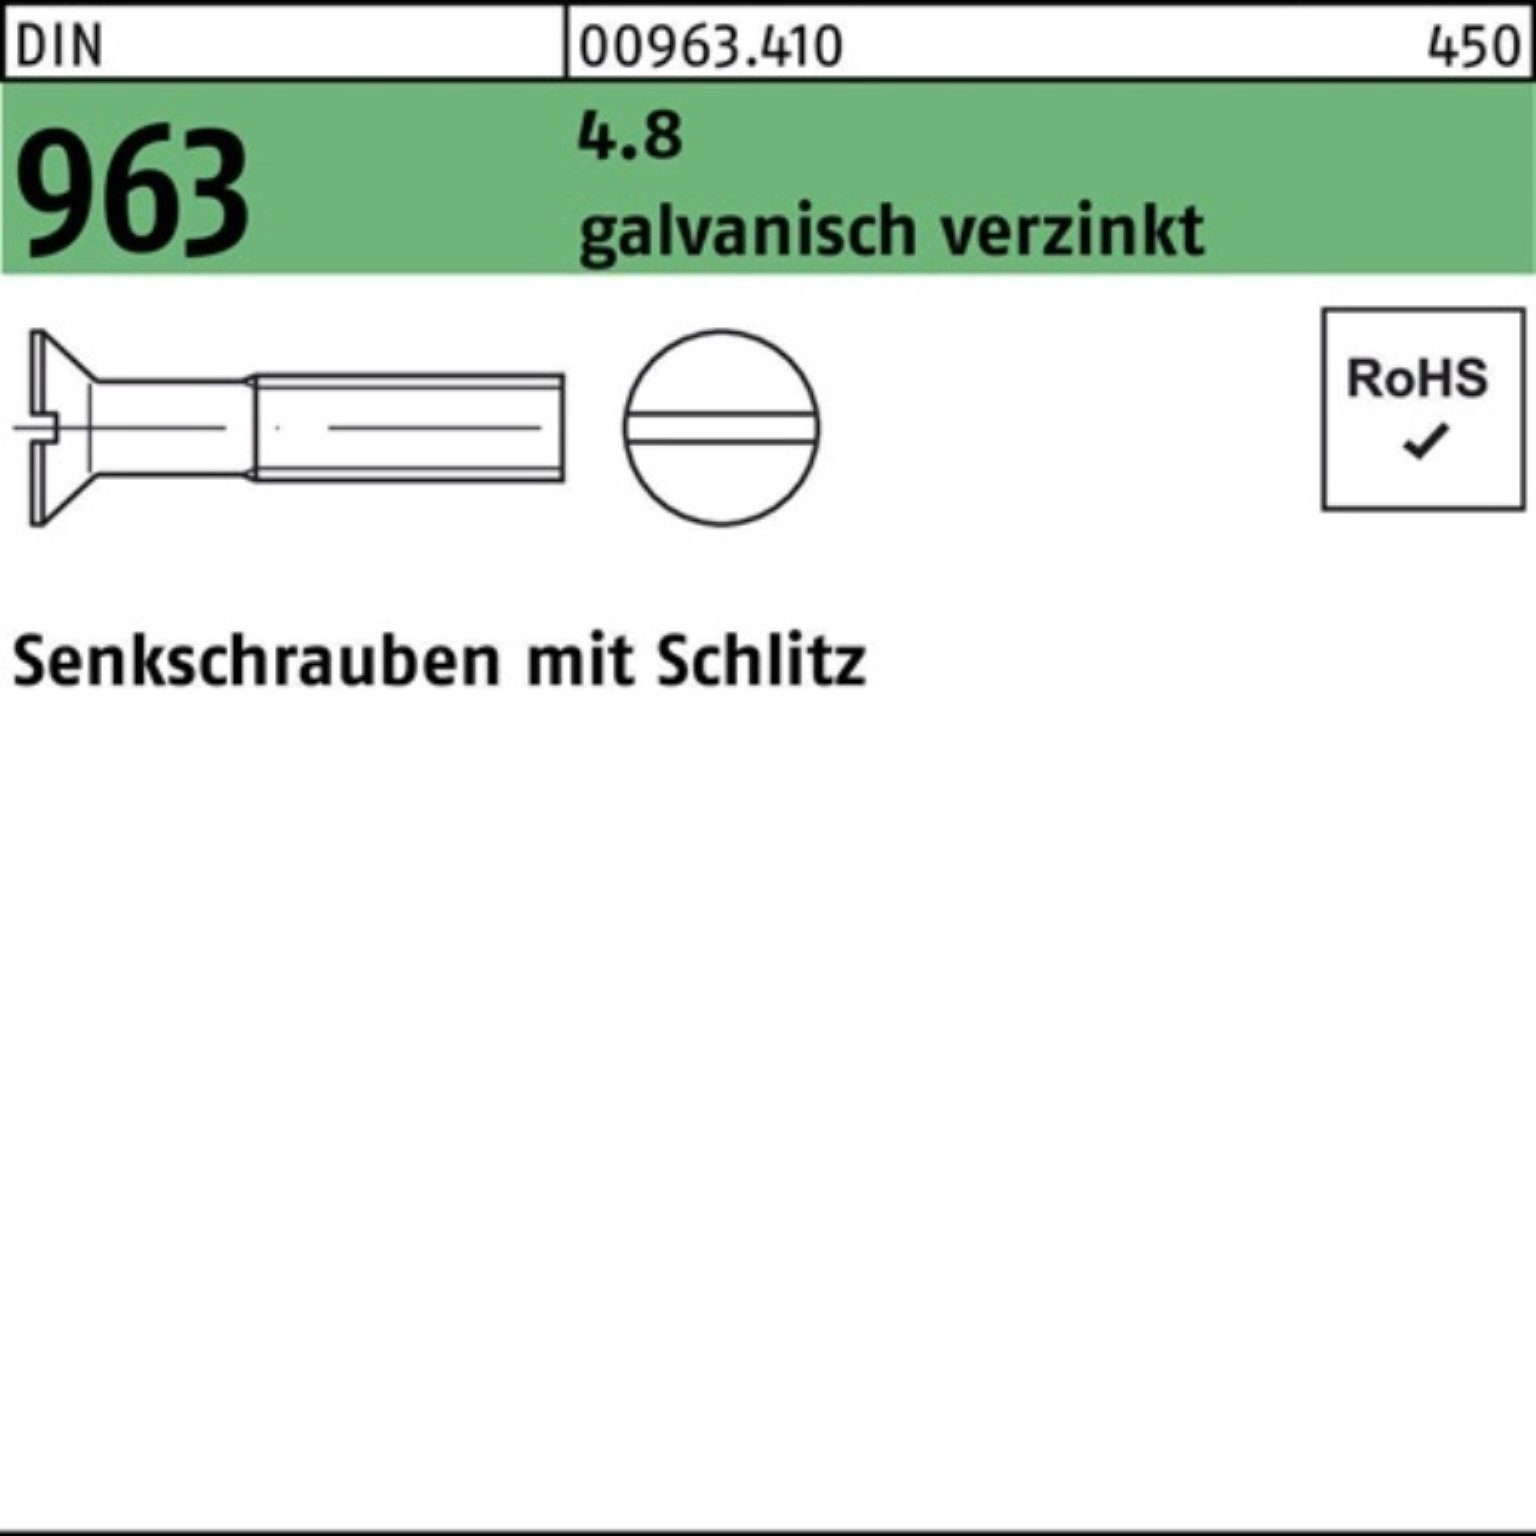 Stü Senkschraube galv.verz. 200 M6x Pack 18 200er Reyher DIN 4.8 Senkschraube Schlitz 963